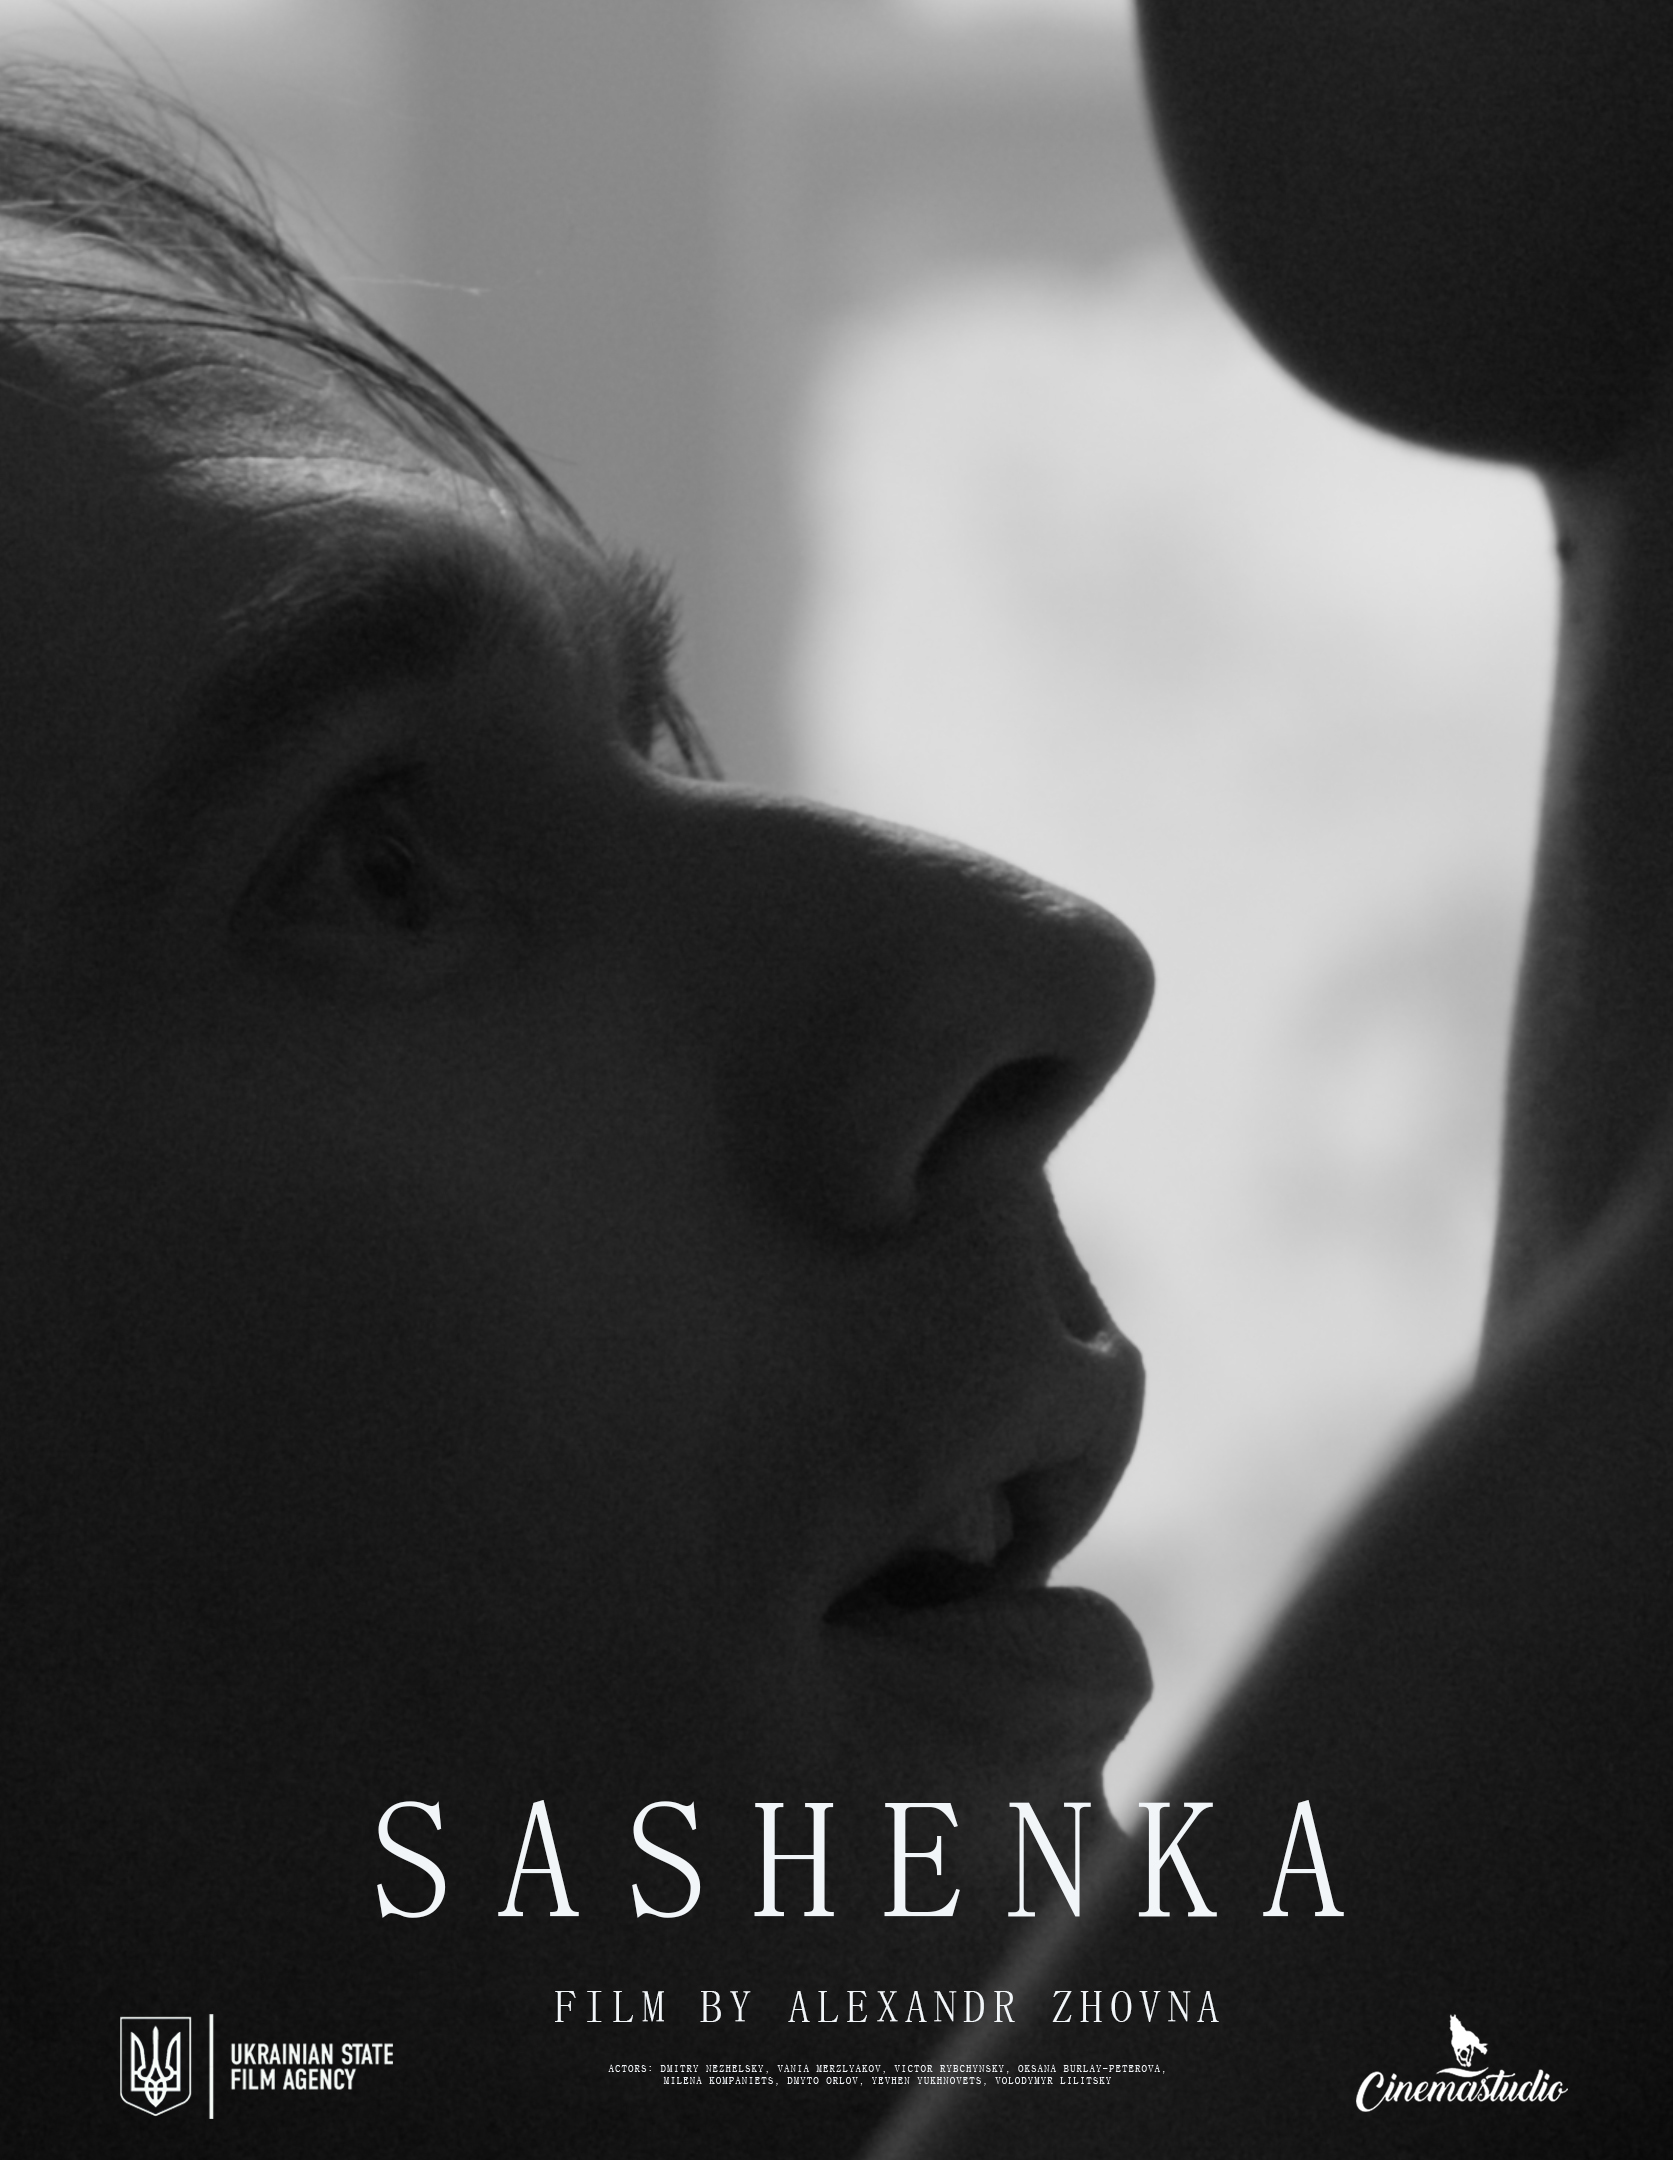 Sashenka